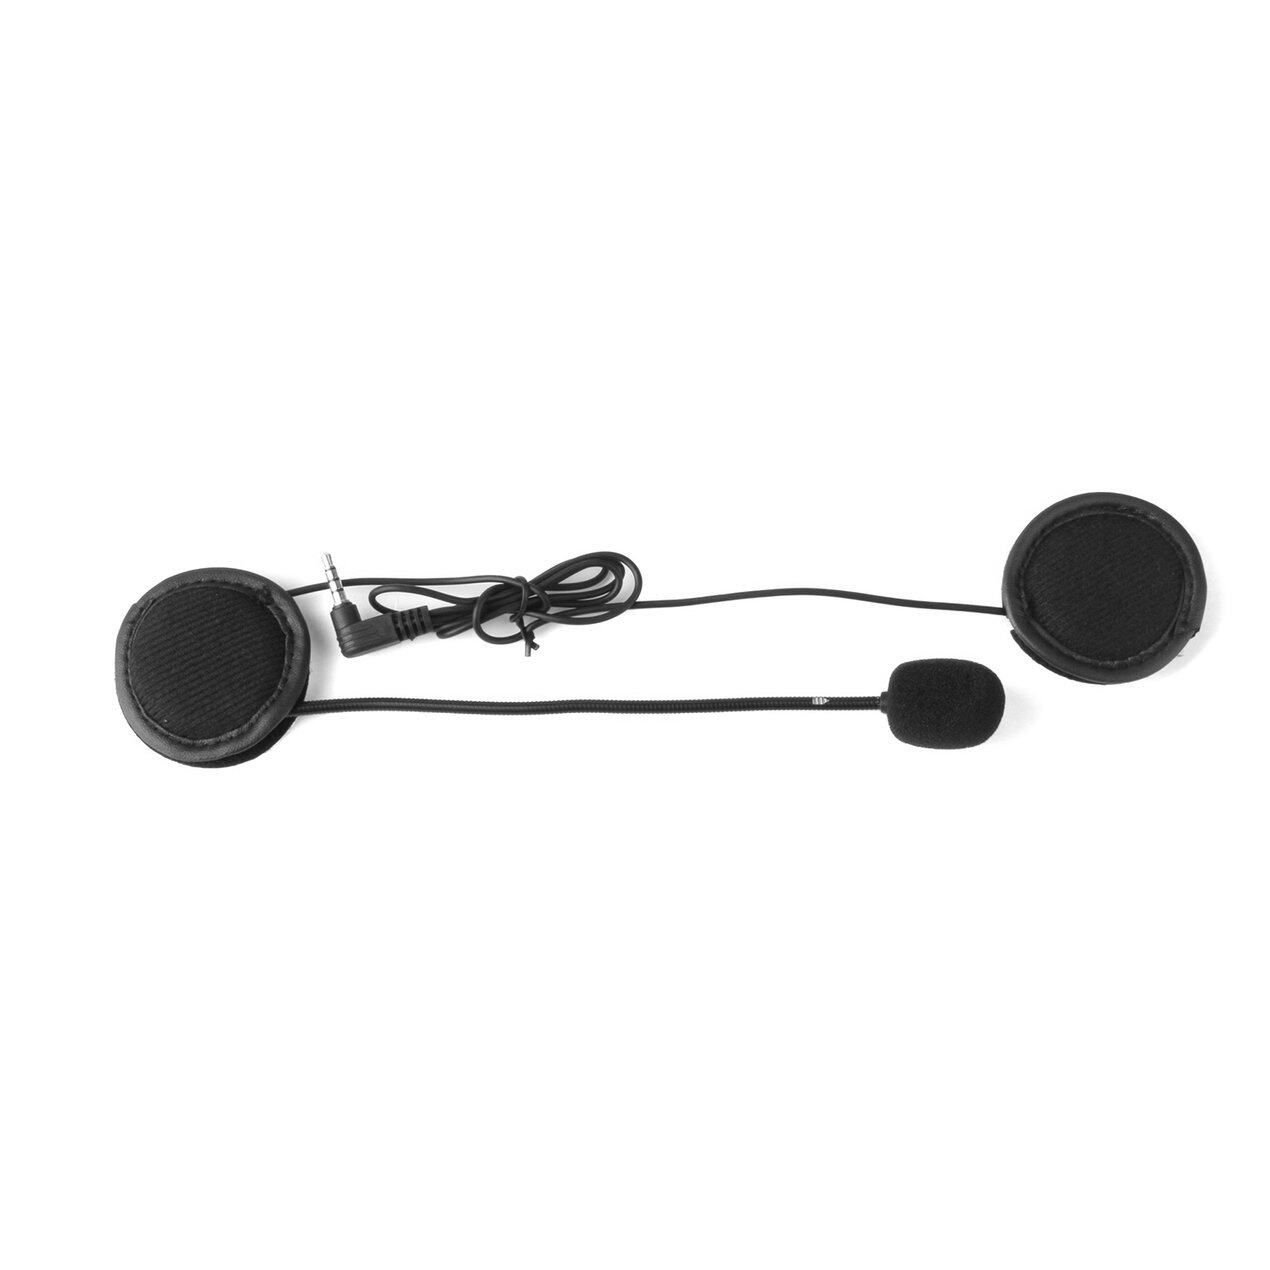 Microphone Speaker Headset V4/V6 Interphone Universal Headset Helmet Intercom Clip for Motorcycle Bluetooth Device 